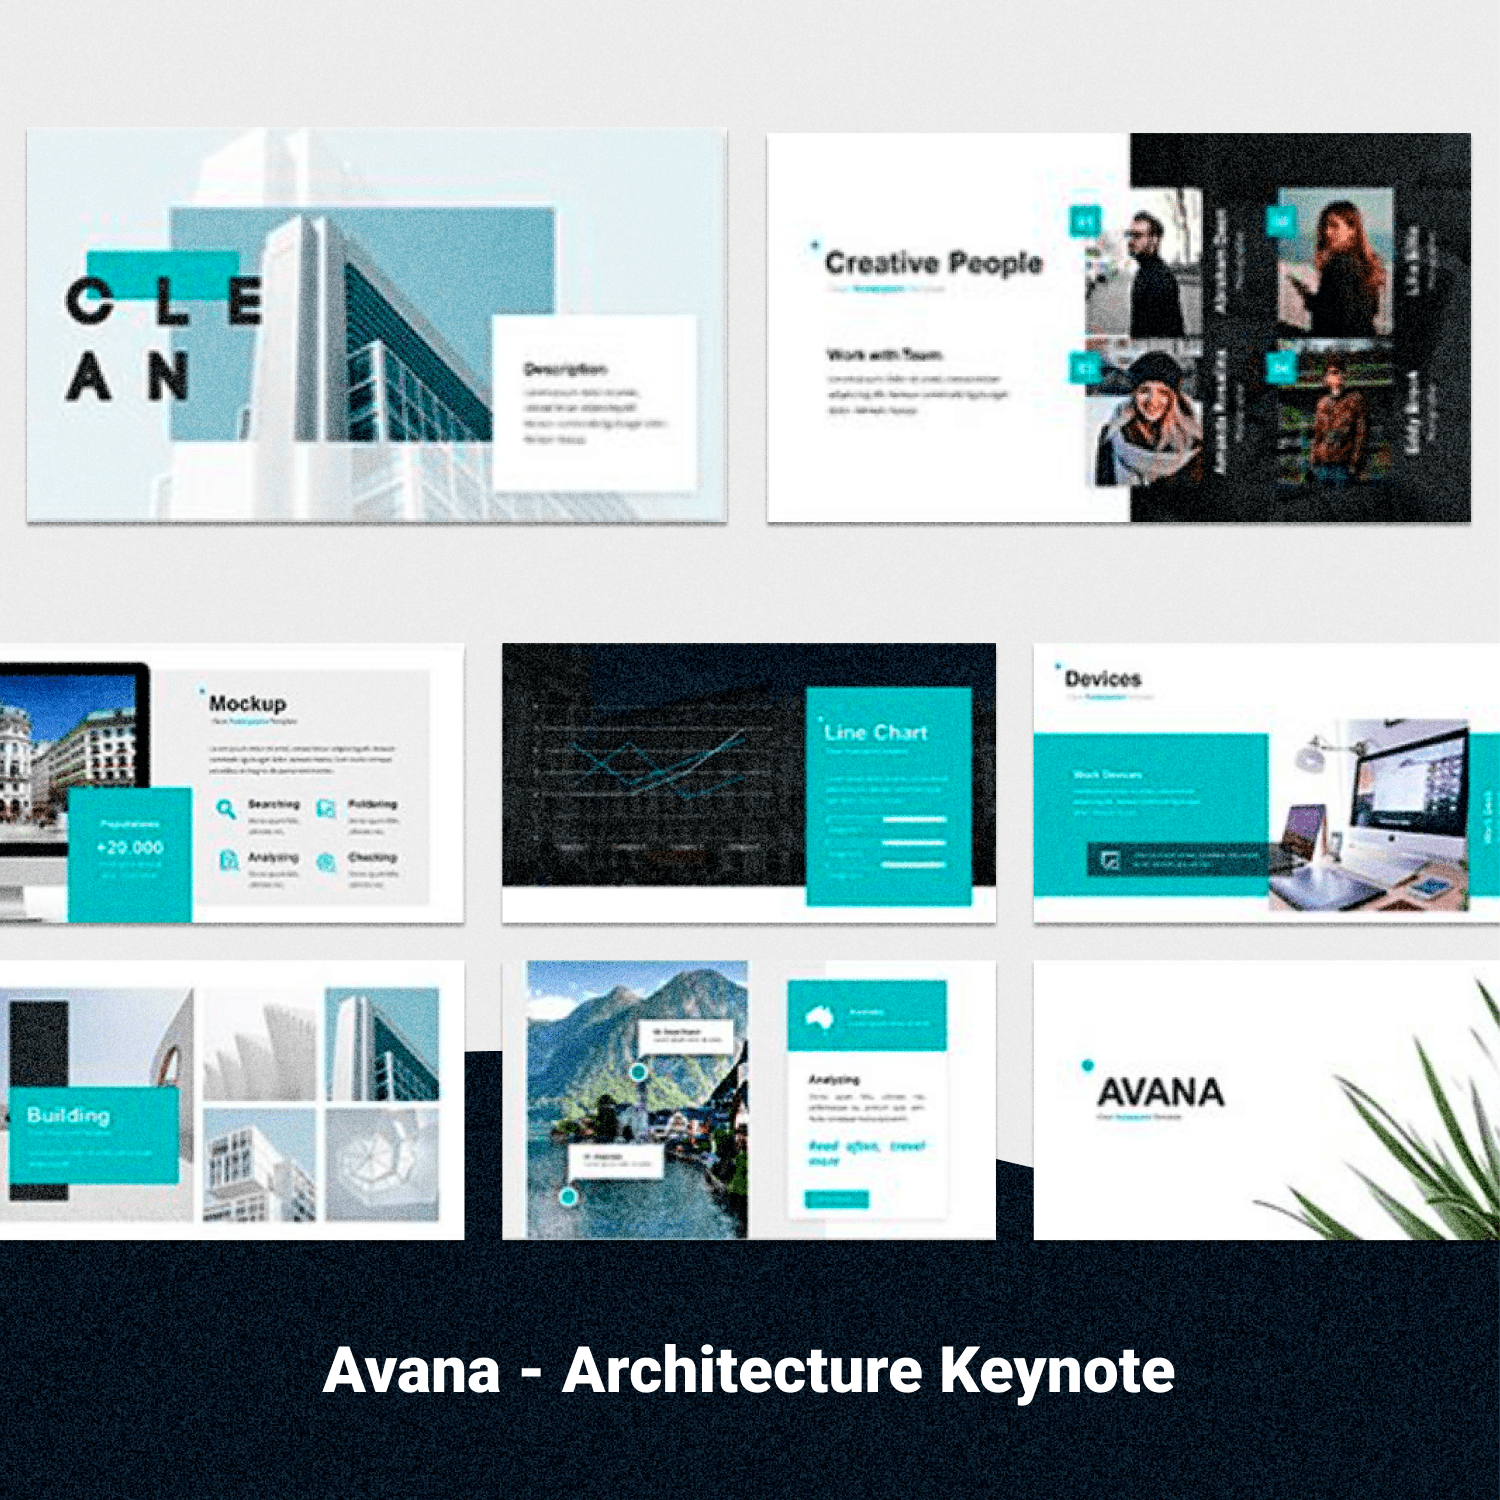 Avana - Architecture Keynote.